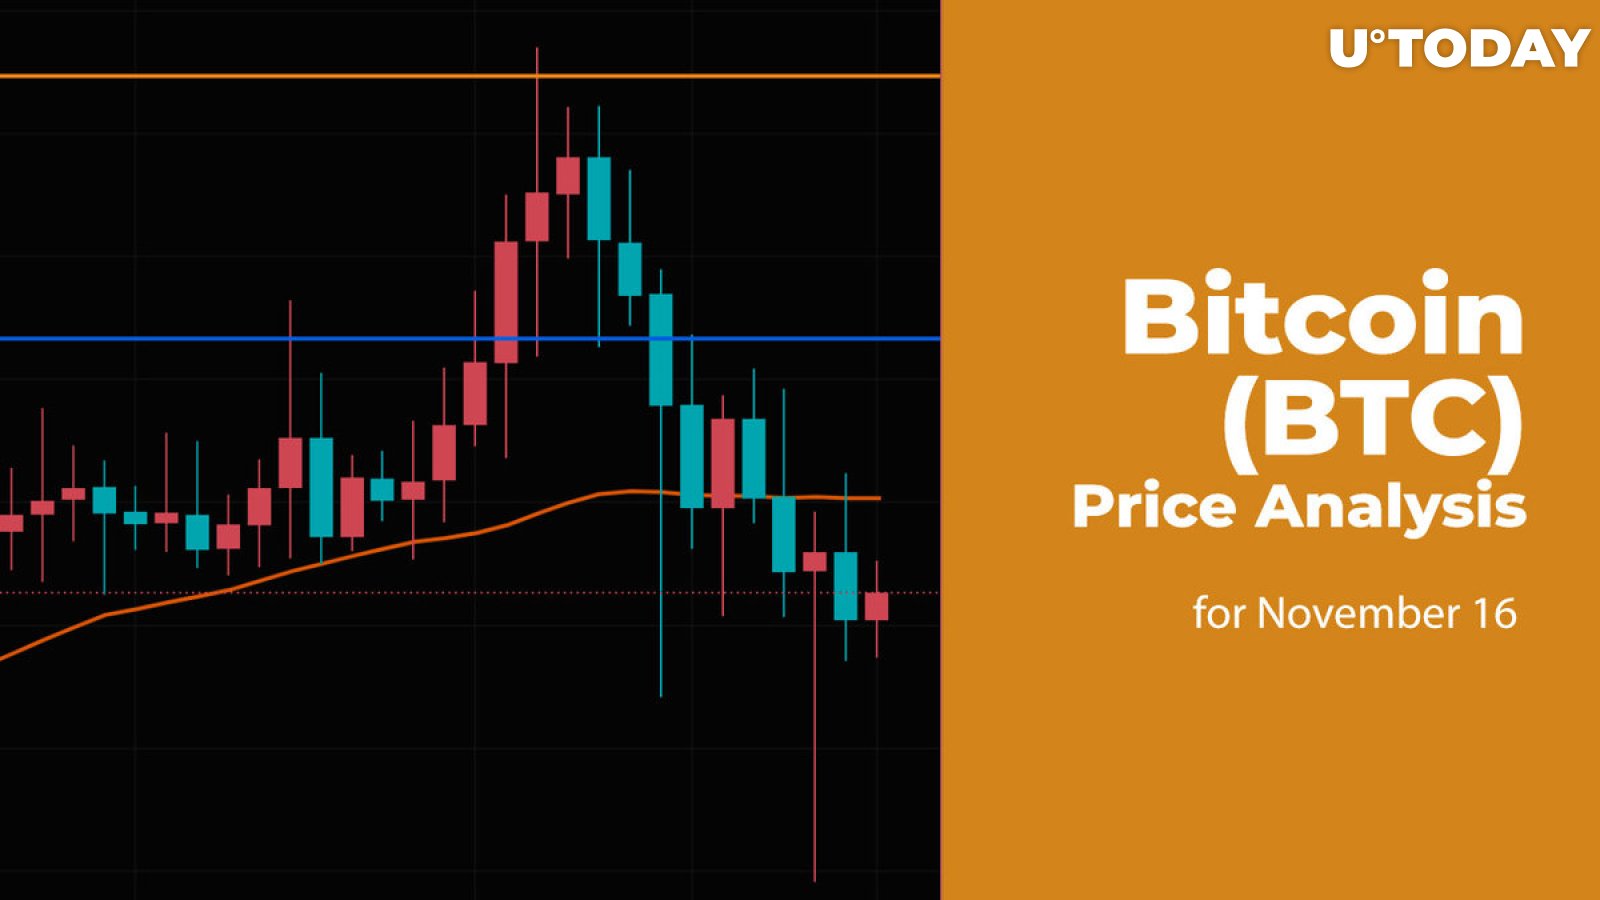 Bitcoin (BTC) Price Analysis for November 16